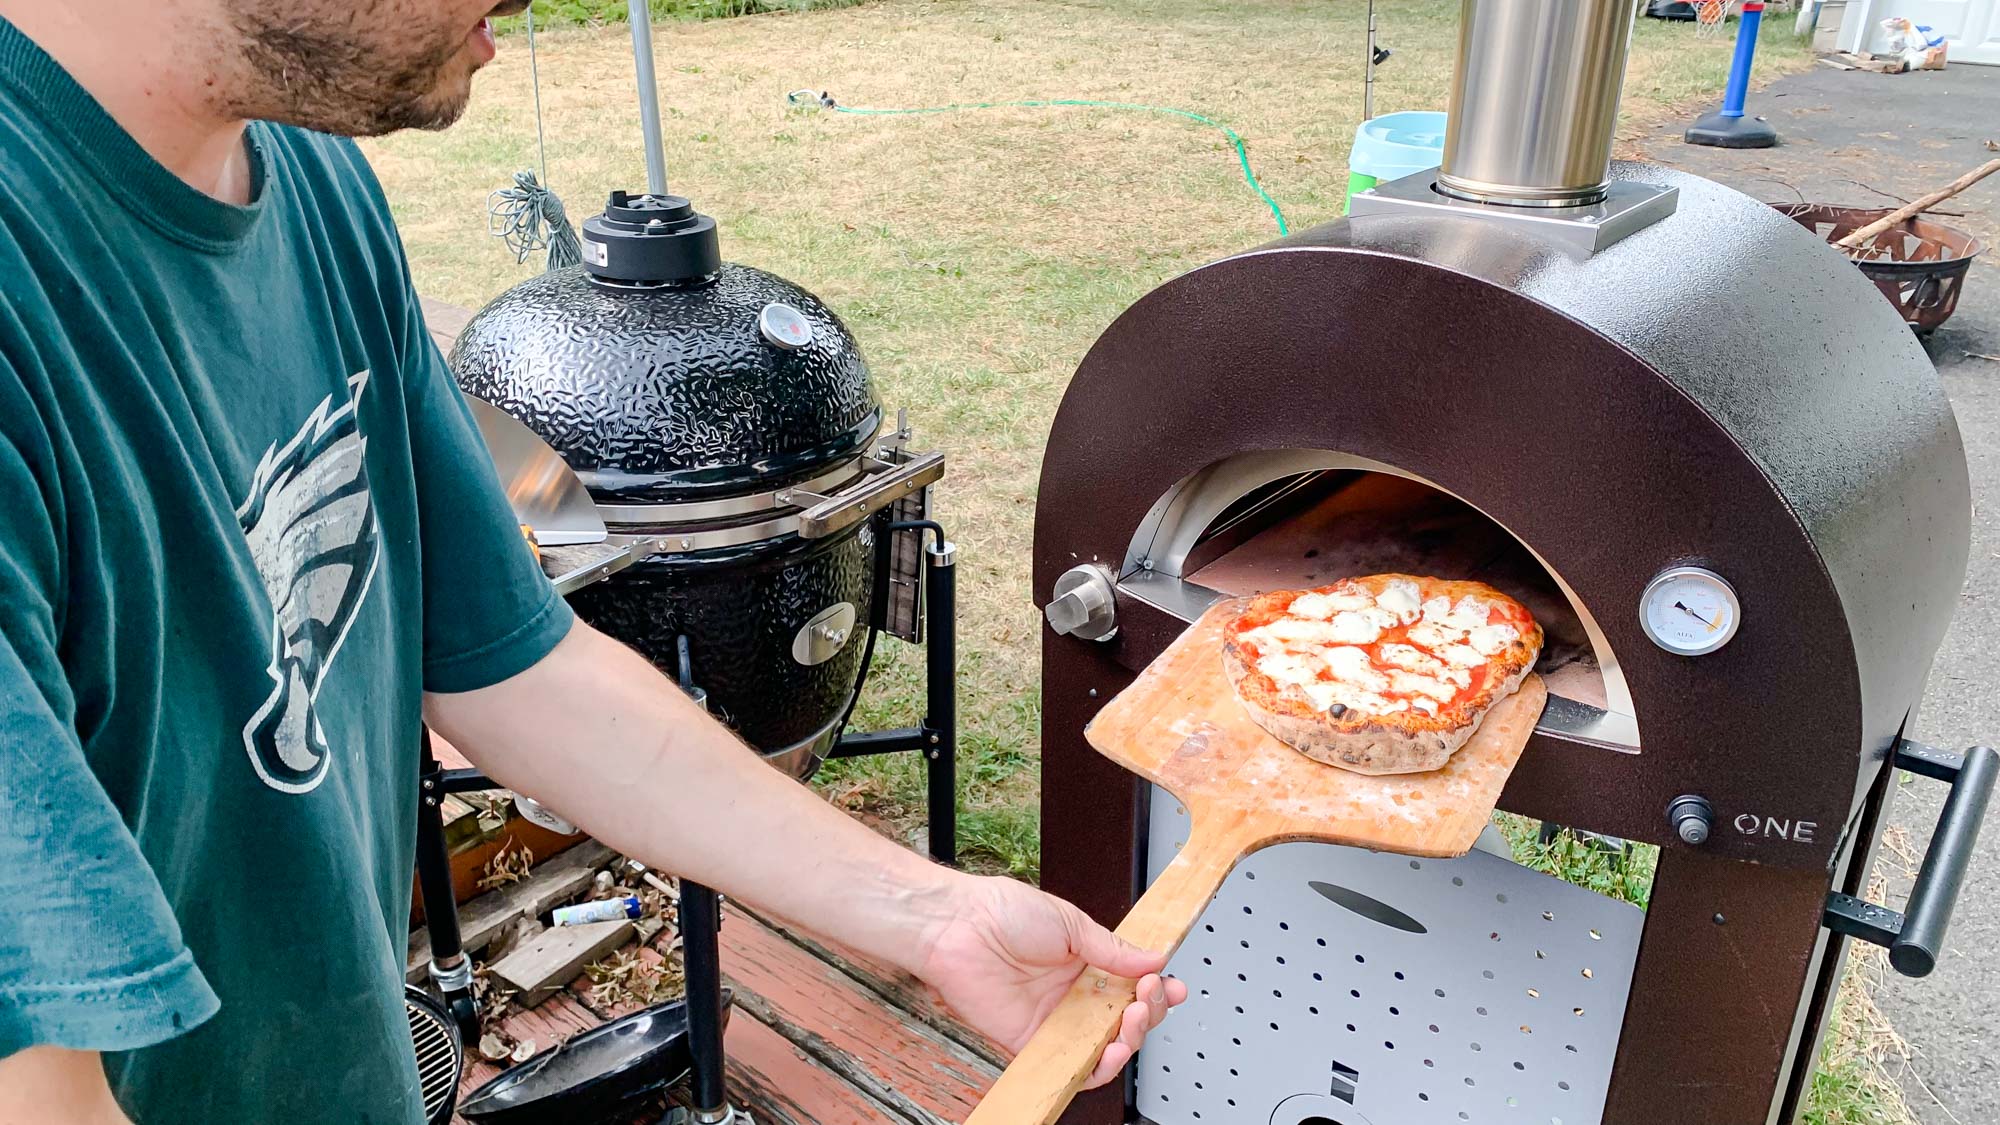 Alfa Nano cooking pizza